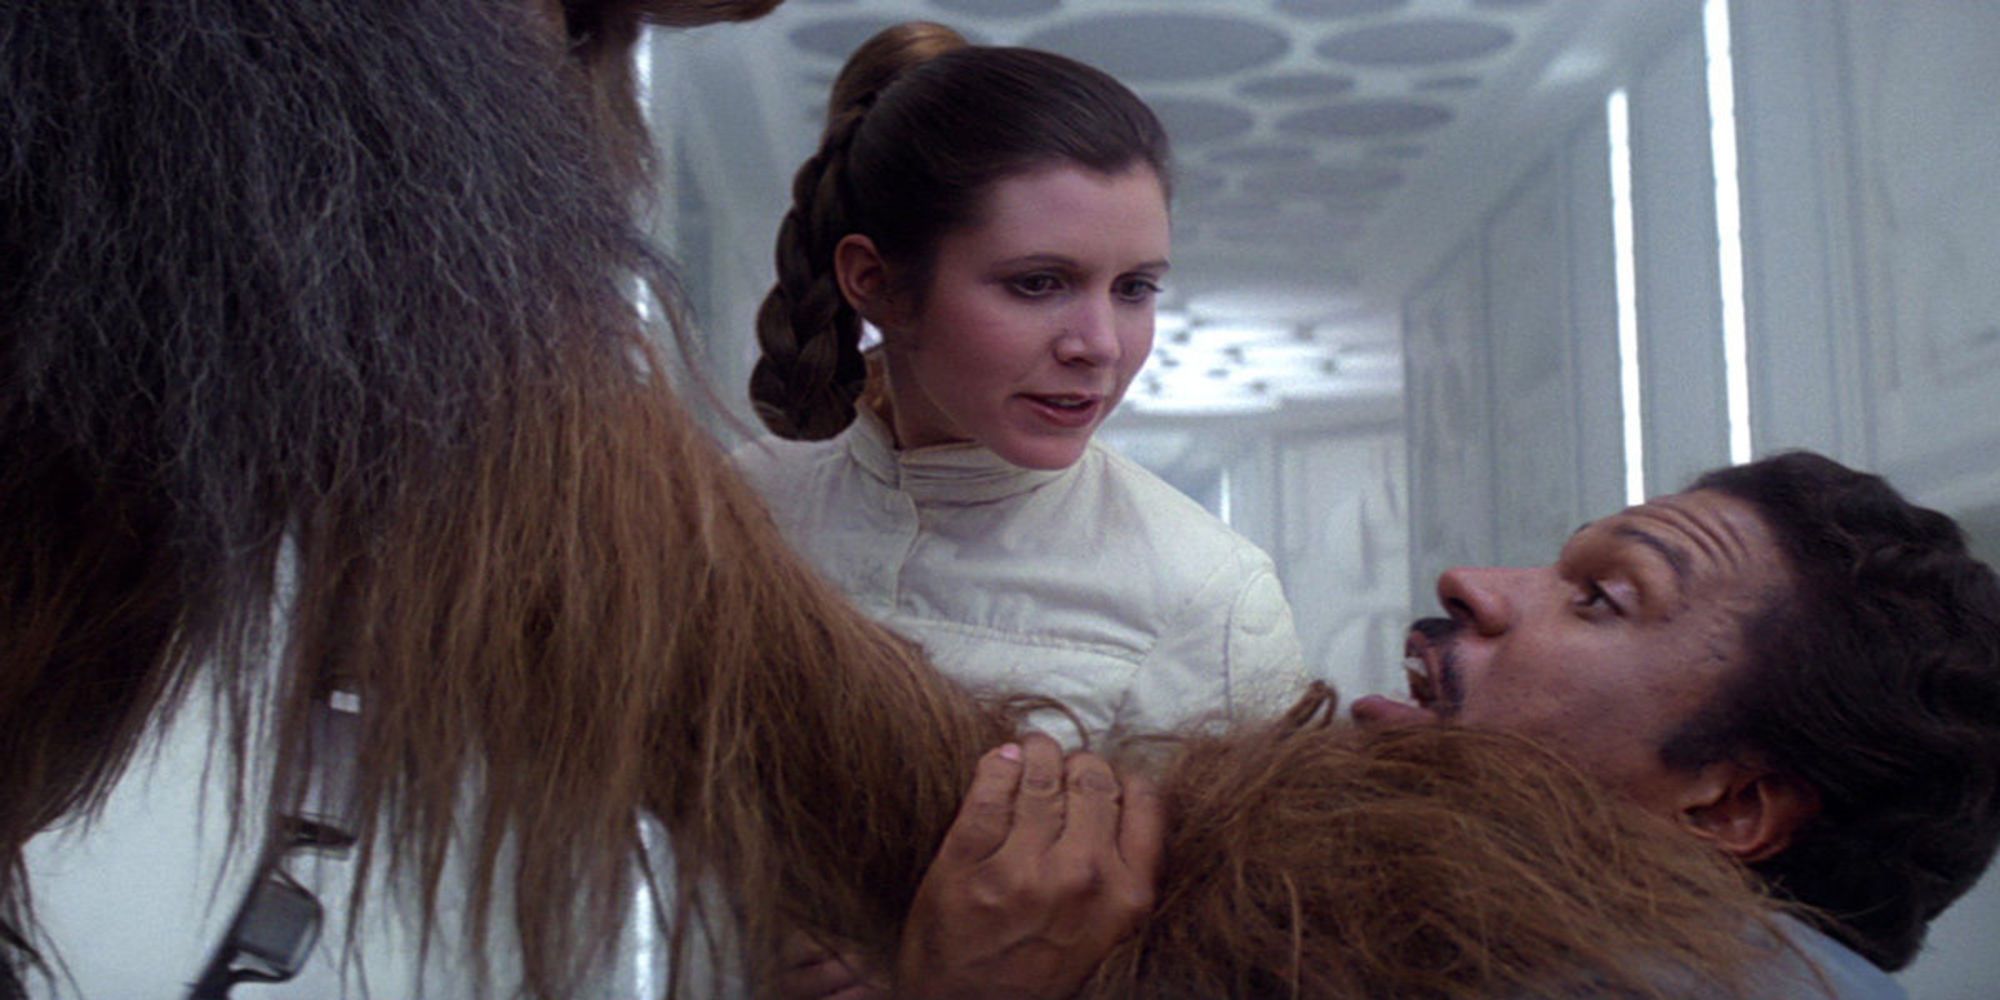 Chewbacca Strangles Lando in Empire Strikes Back As Princess Leia Organa Watches